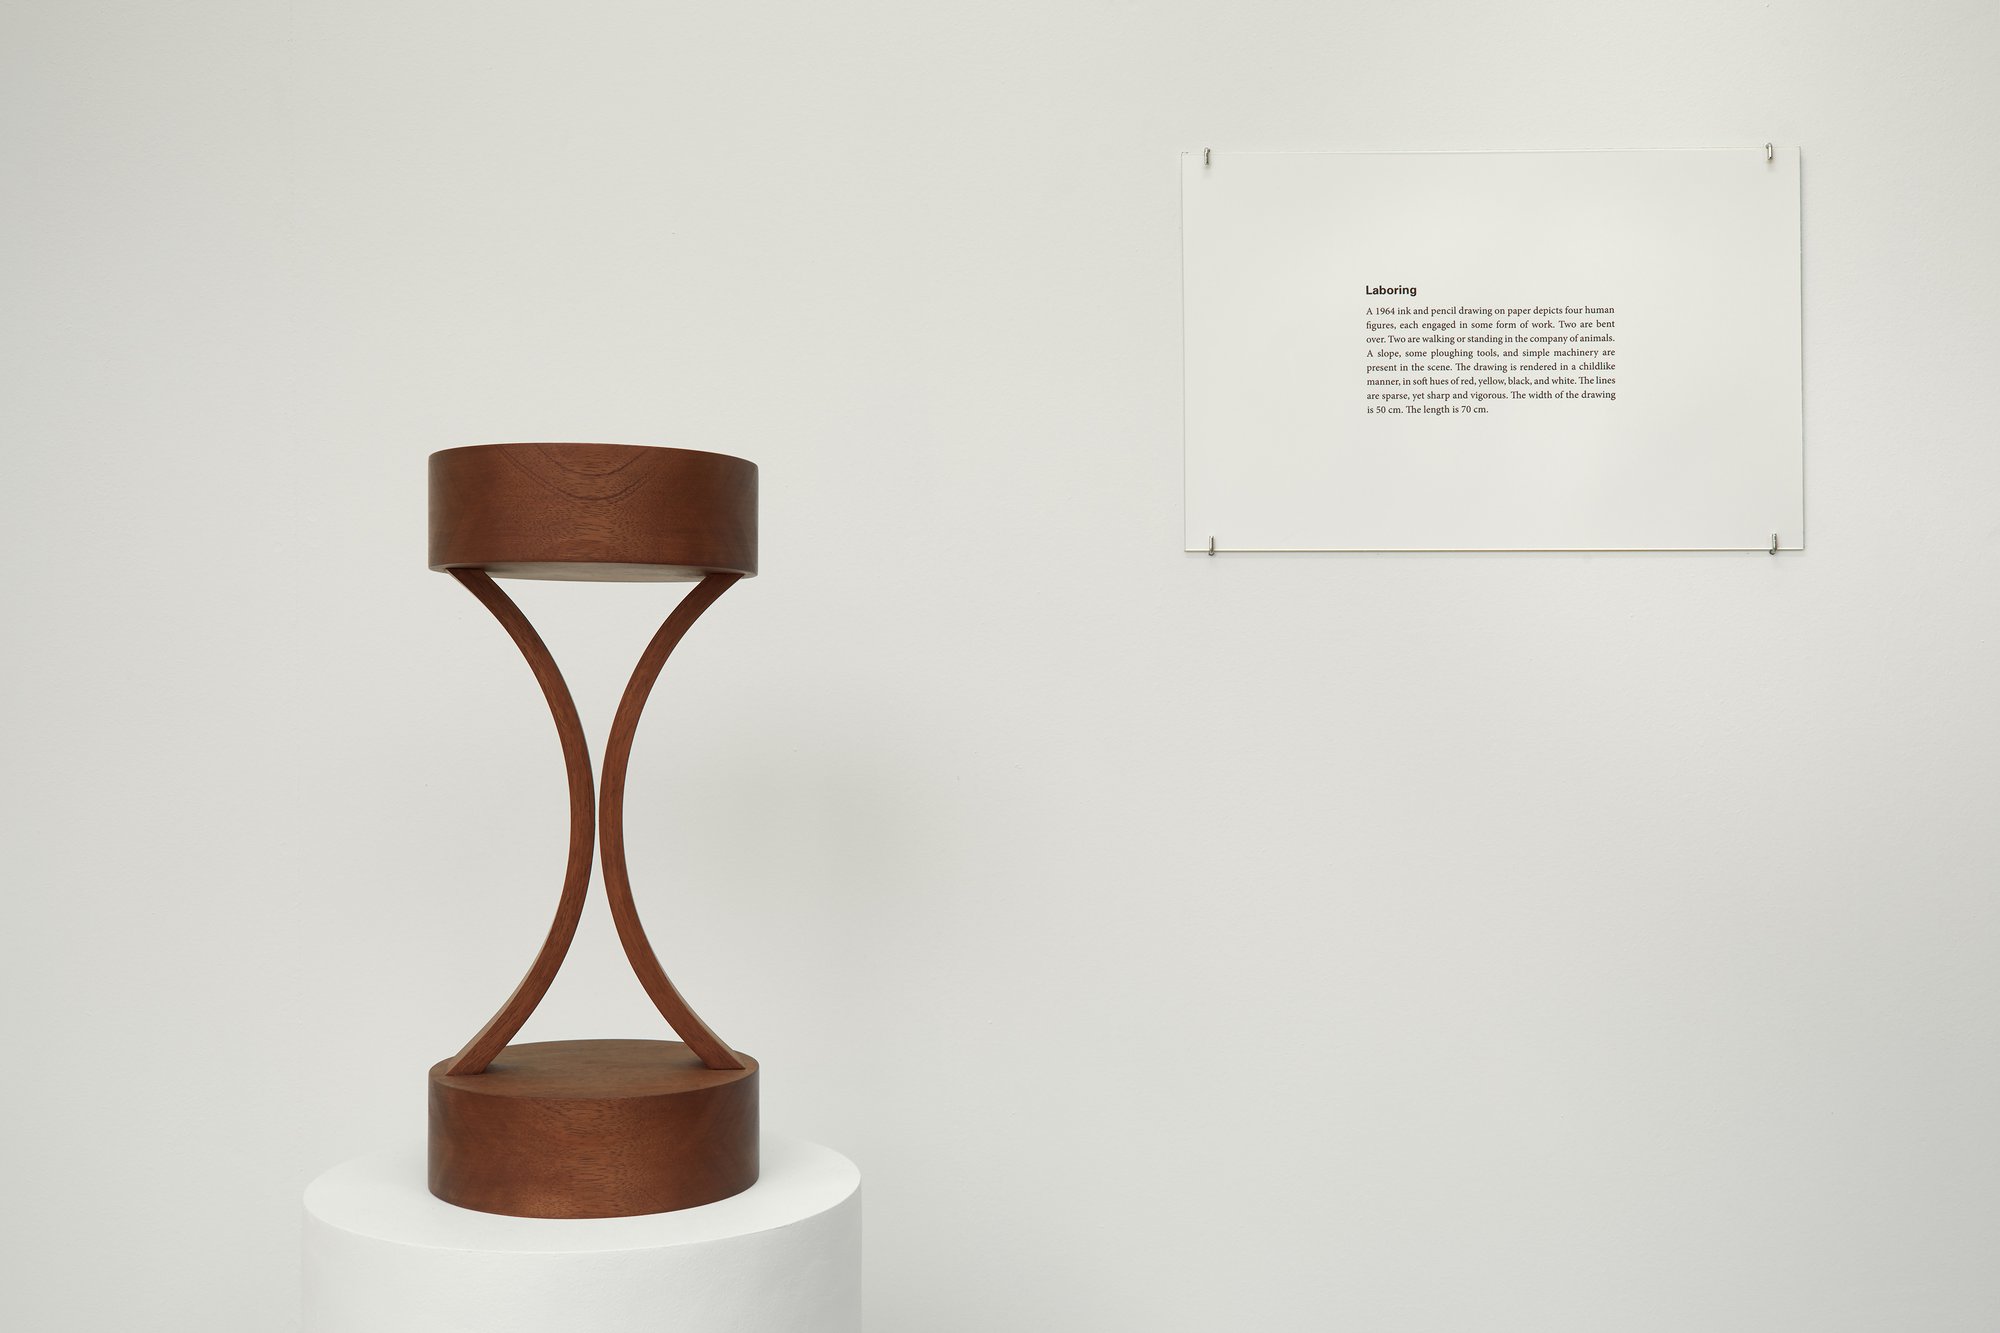 Iman Issa, Labouring (study for 2012), mahogany sculpture, text panel under glass, white plinth, sculpture: 39.4 x 18 cm, plinth: 95.2 x 30 cm, 2012